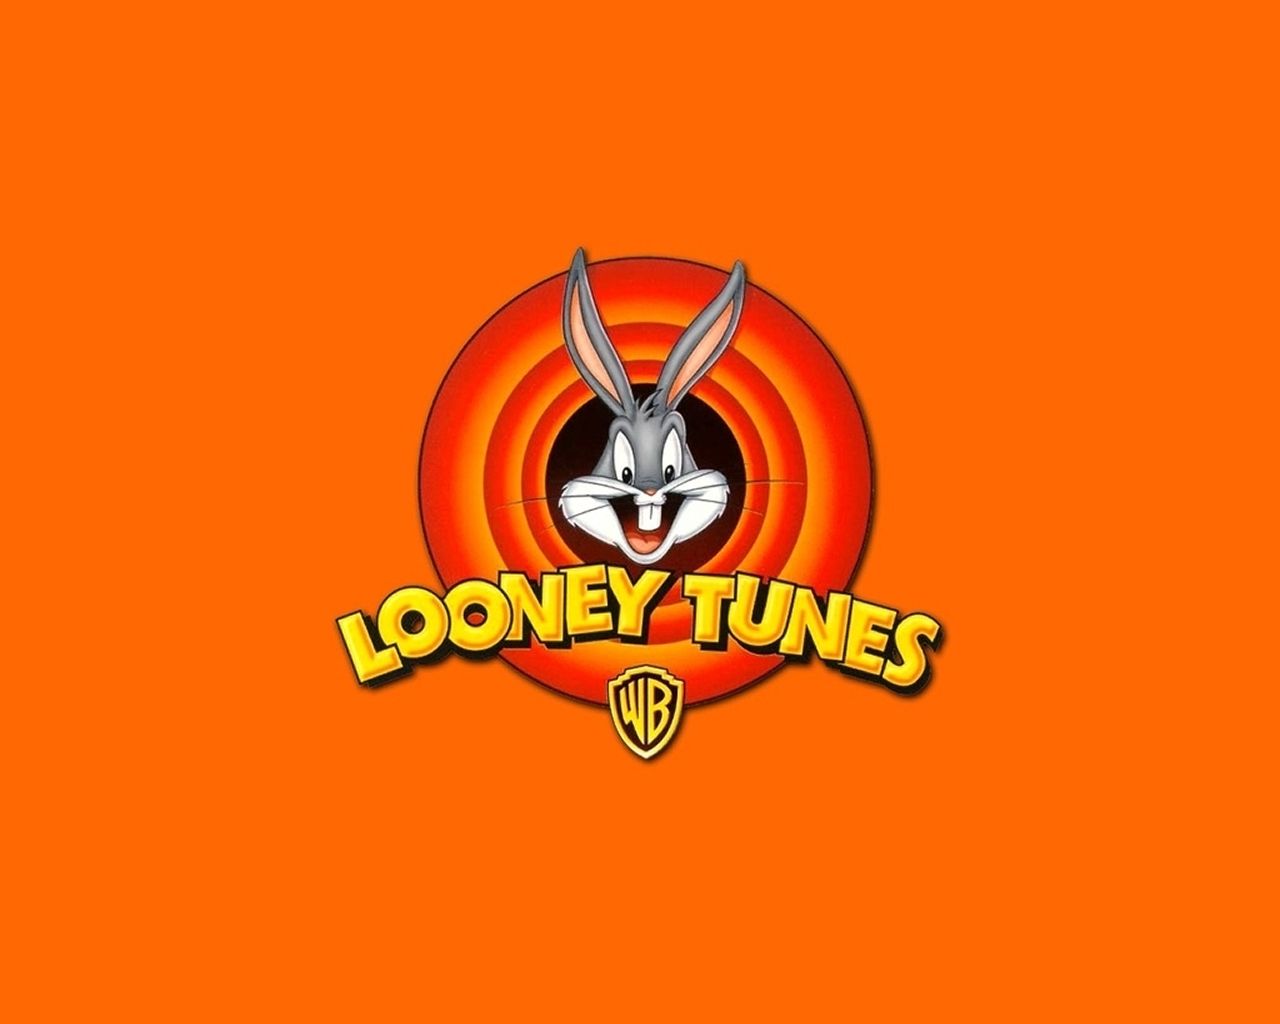 Looney Tunes Wallpaper Number 2 (1280 x 1024 Pixels)